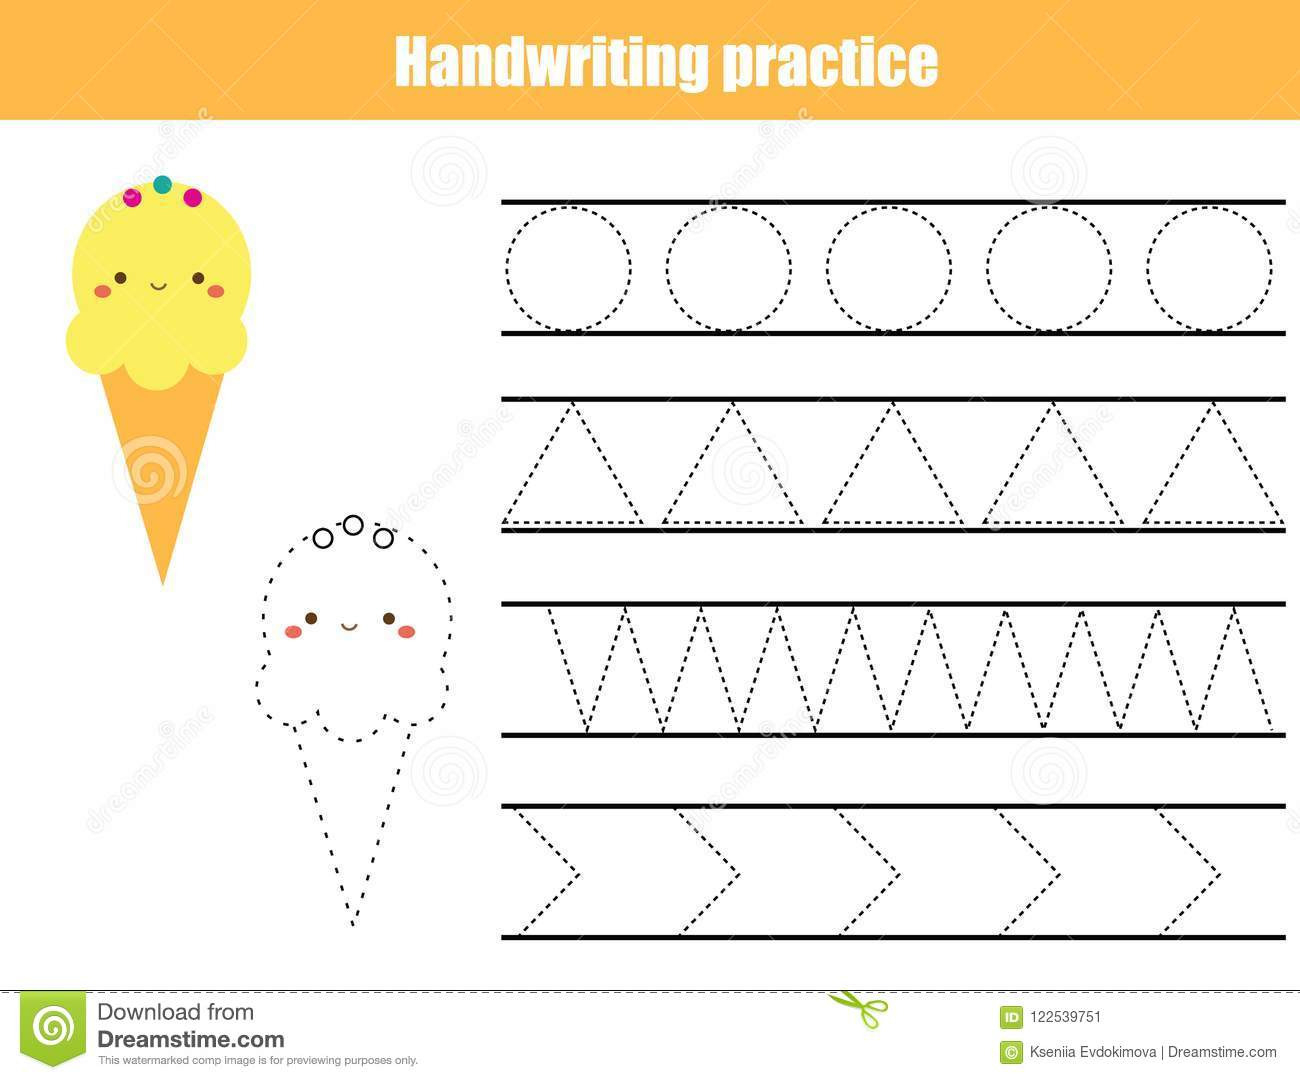 handwriting practice sheet educational children game db excelcom